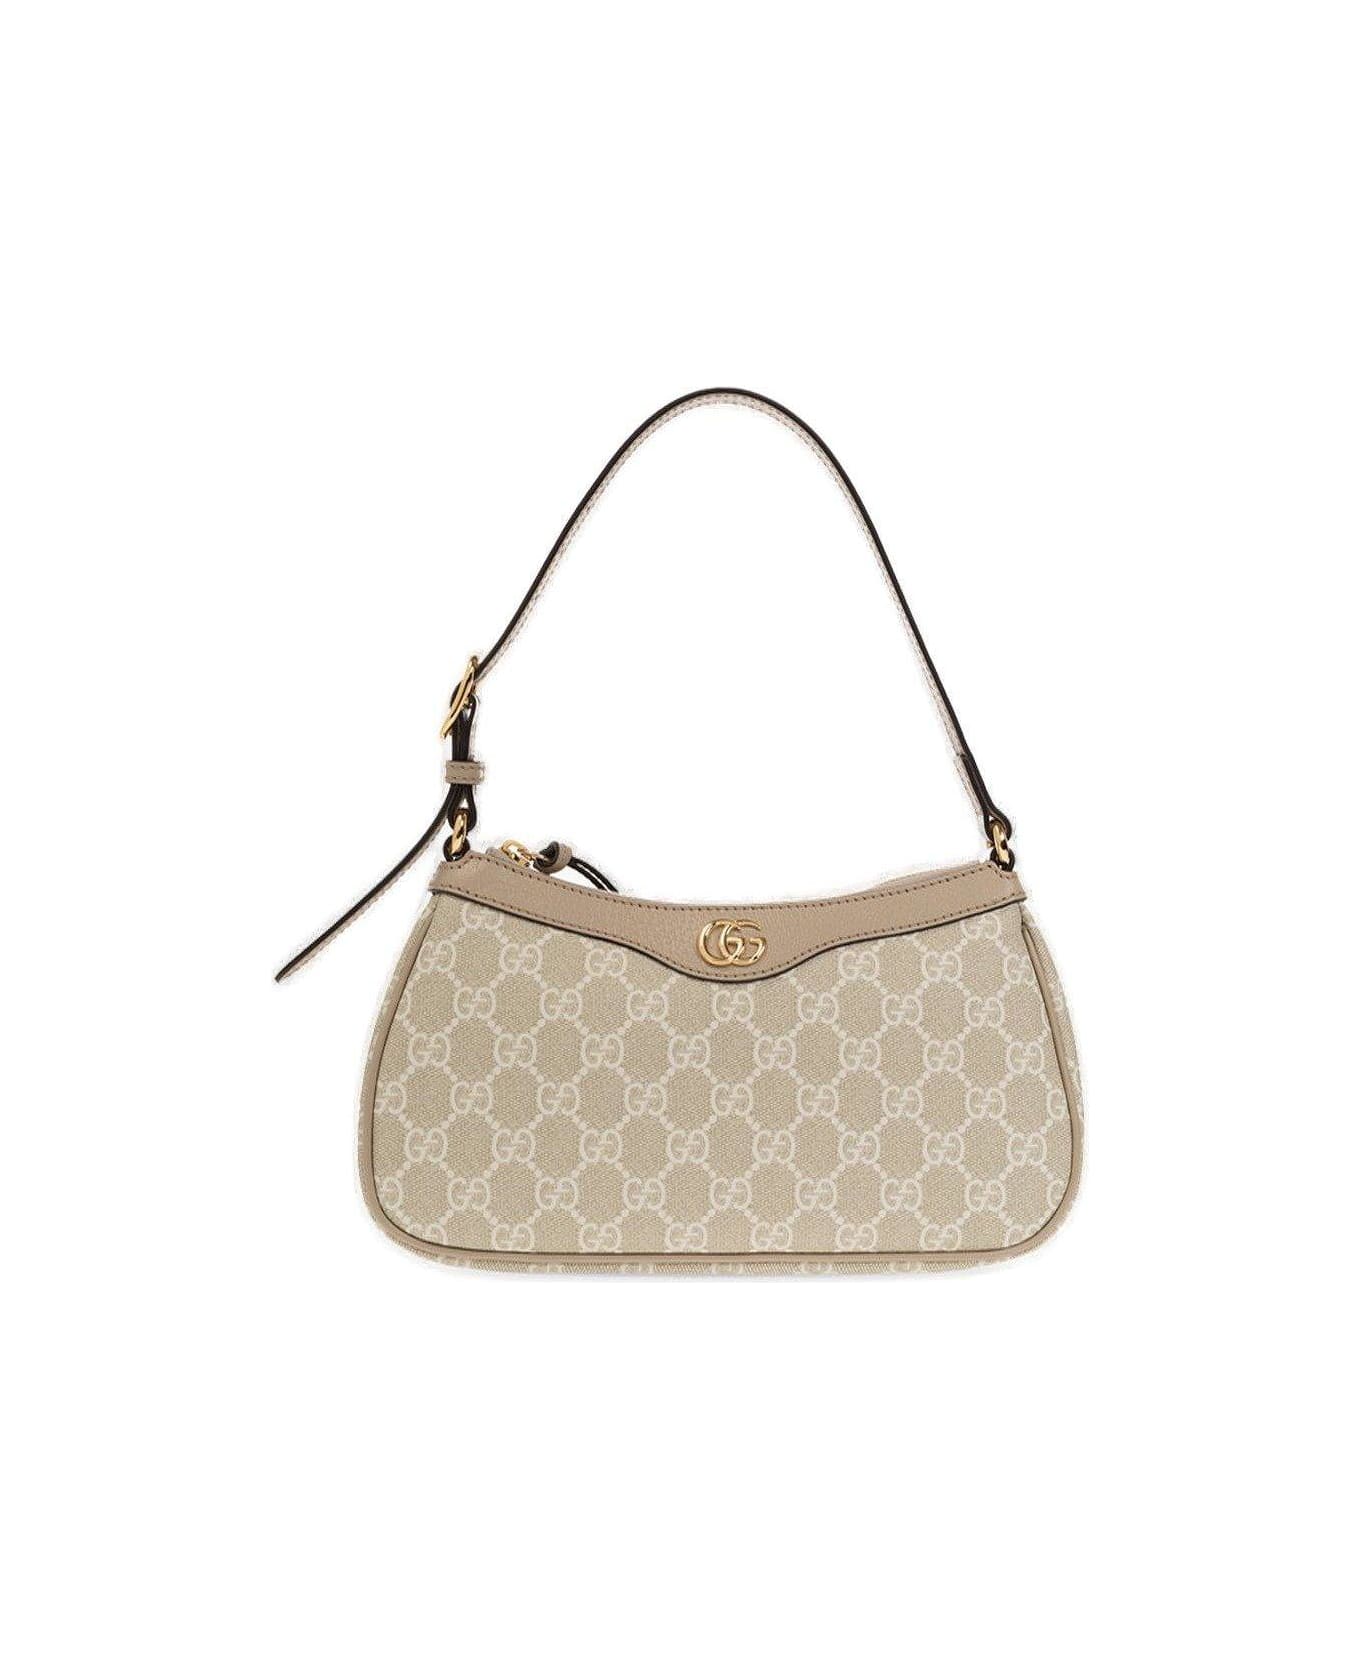 Gucci Ophidia Small Shoulder Bag - Beige